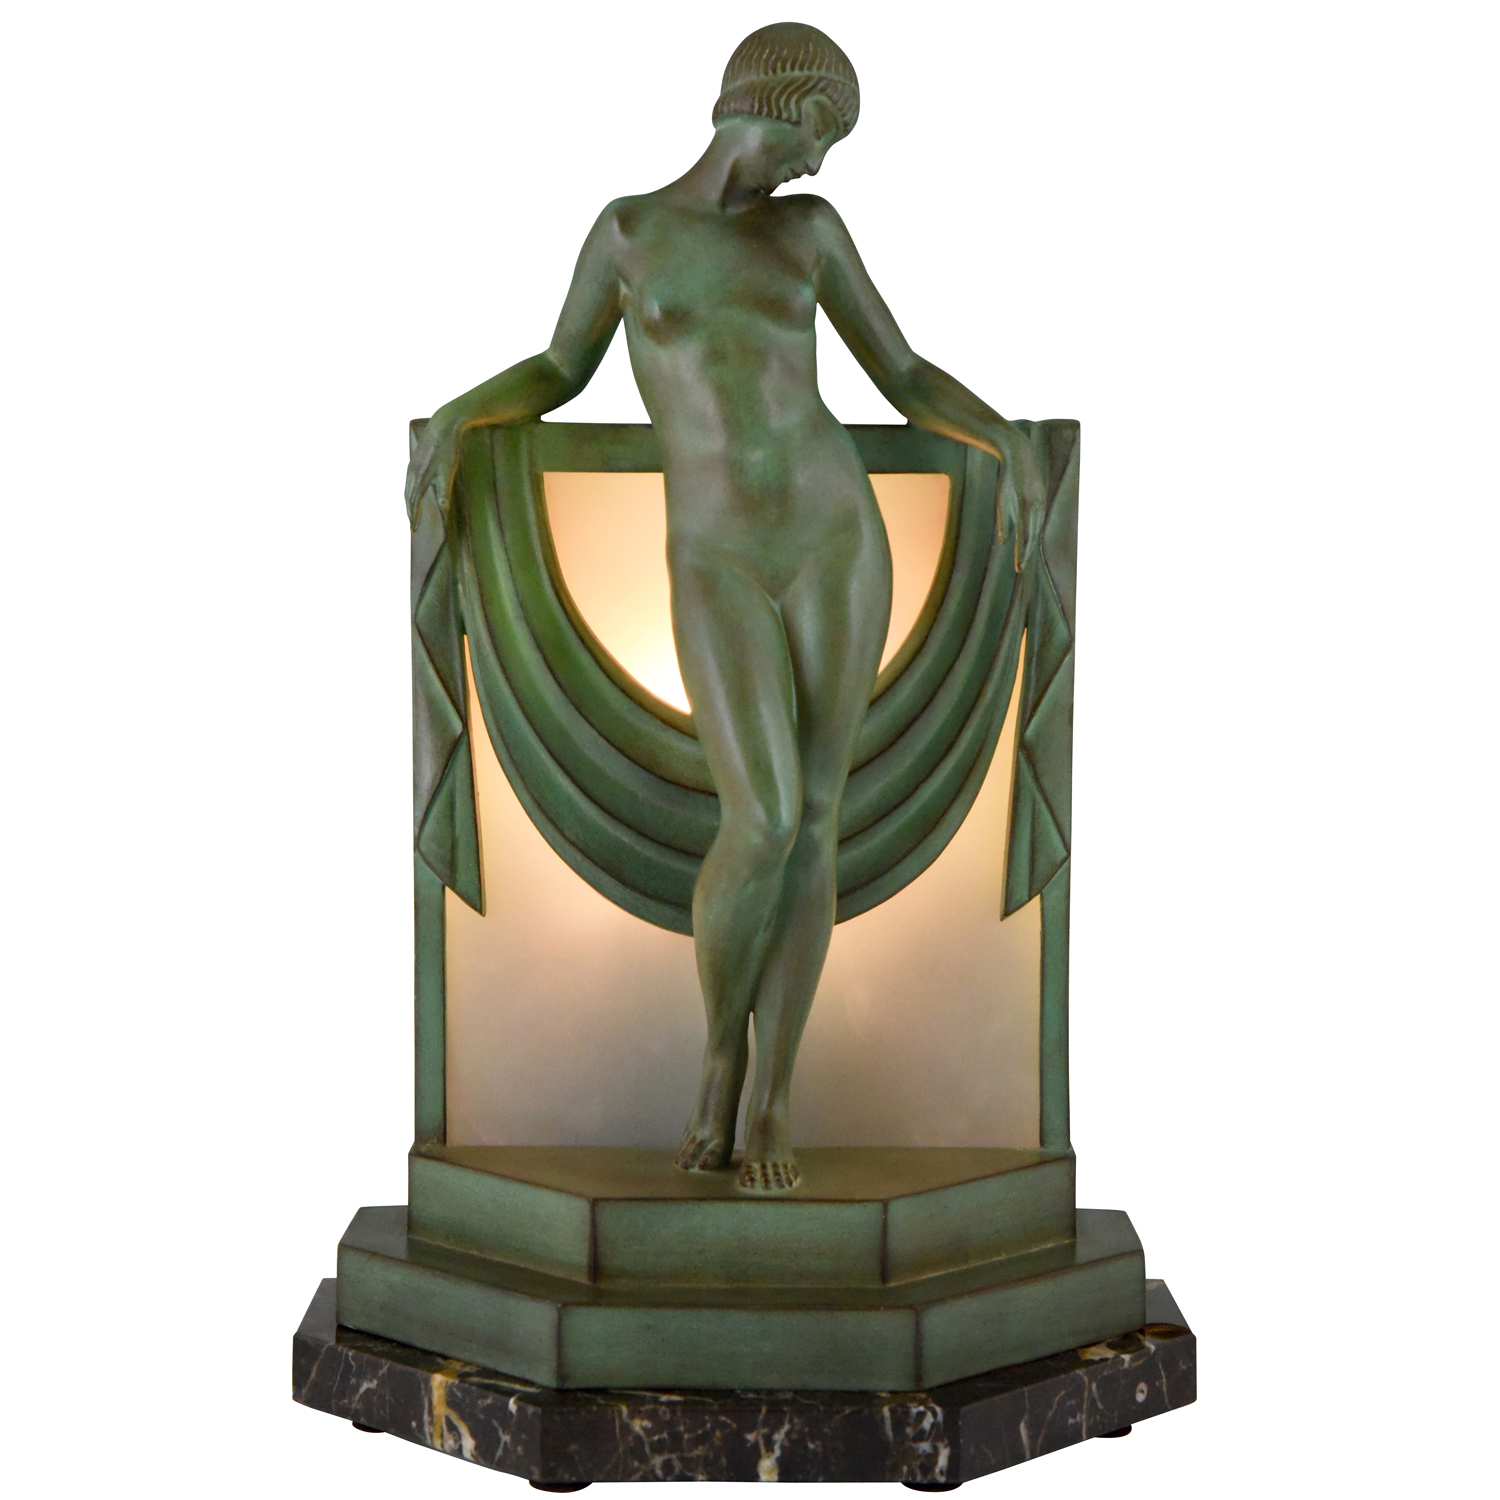 Art Deco lamp sculpture nude with scarf.